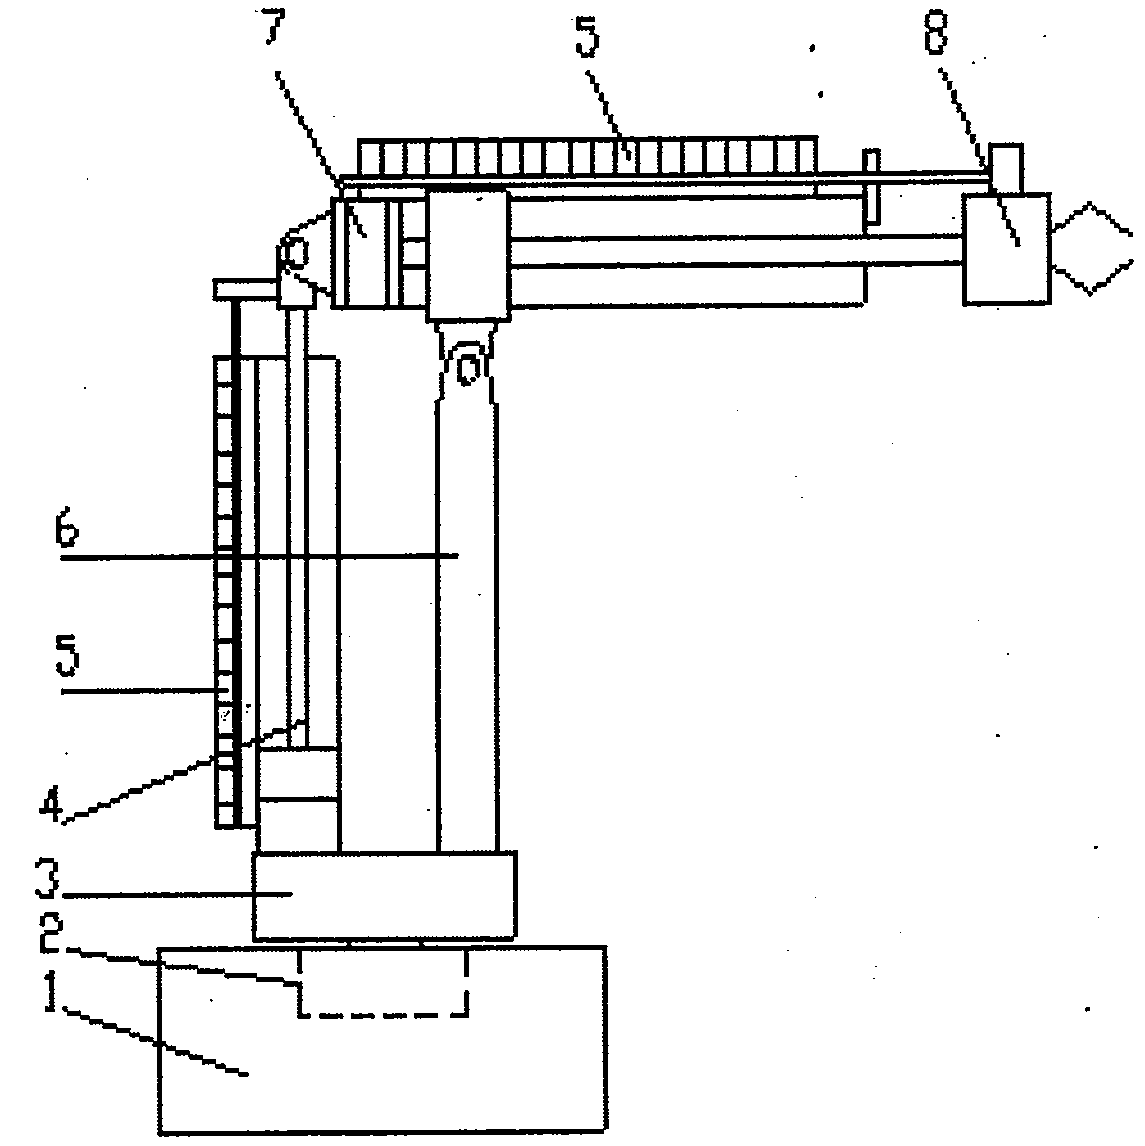 Polar coordinate mechanical arm